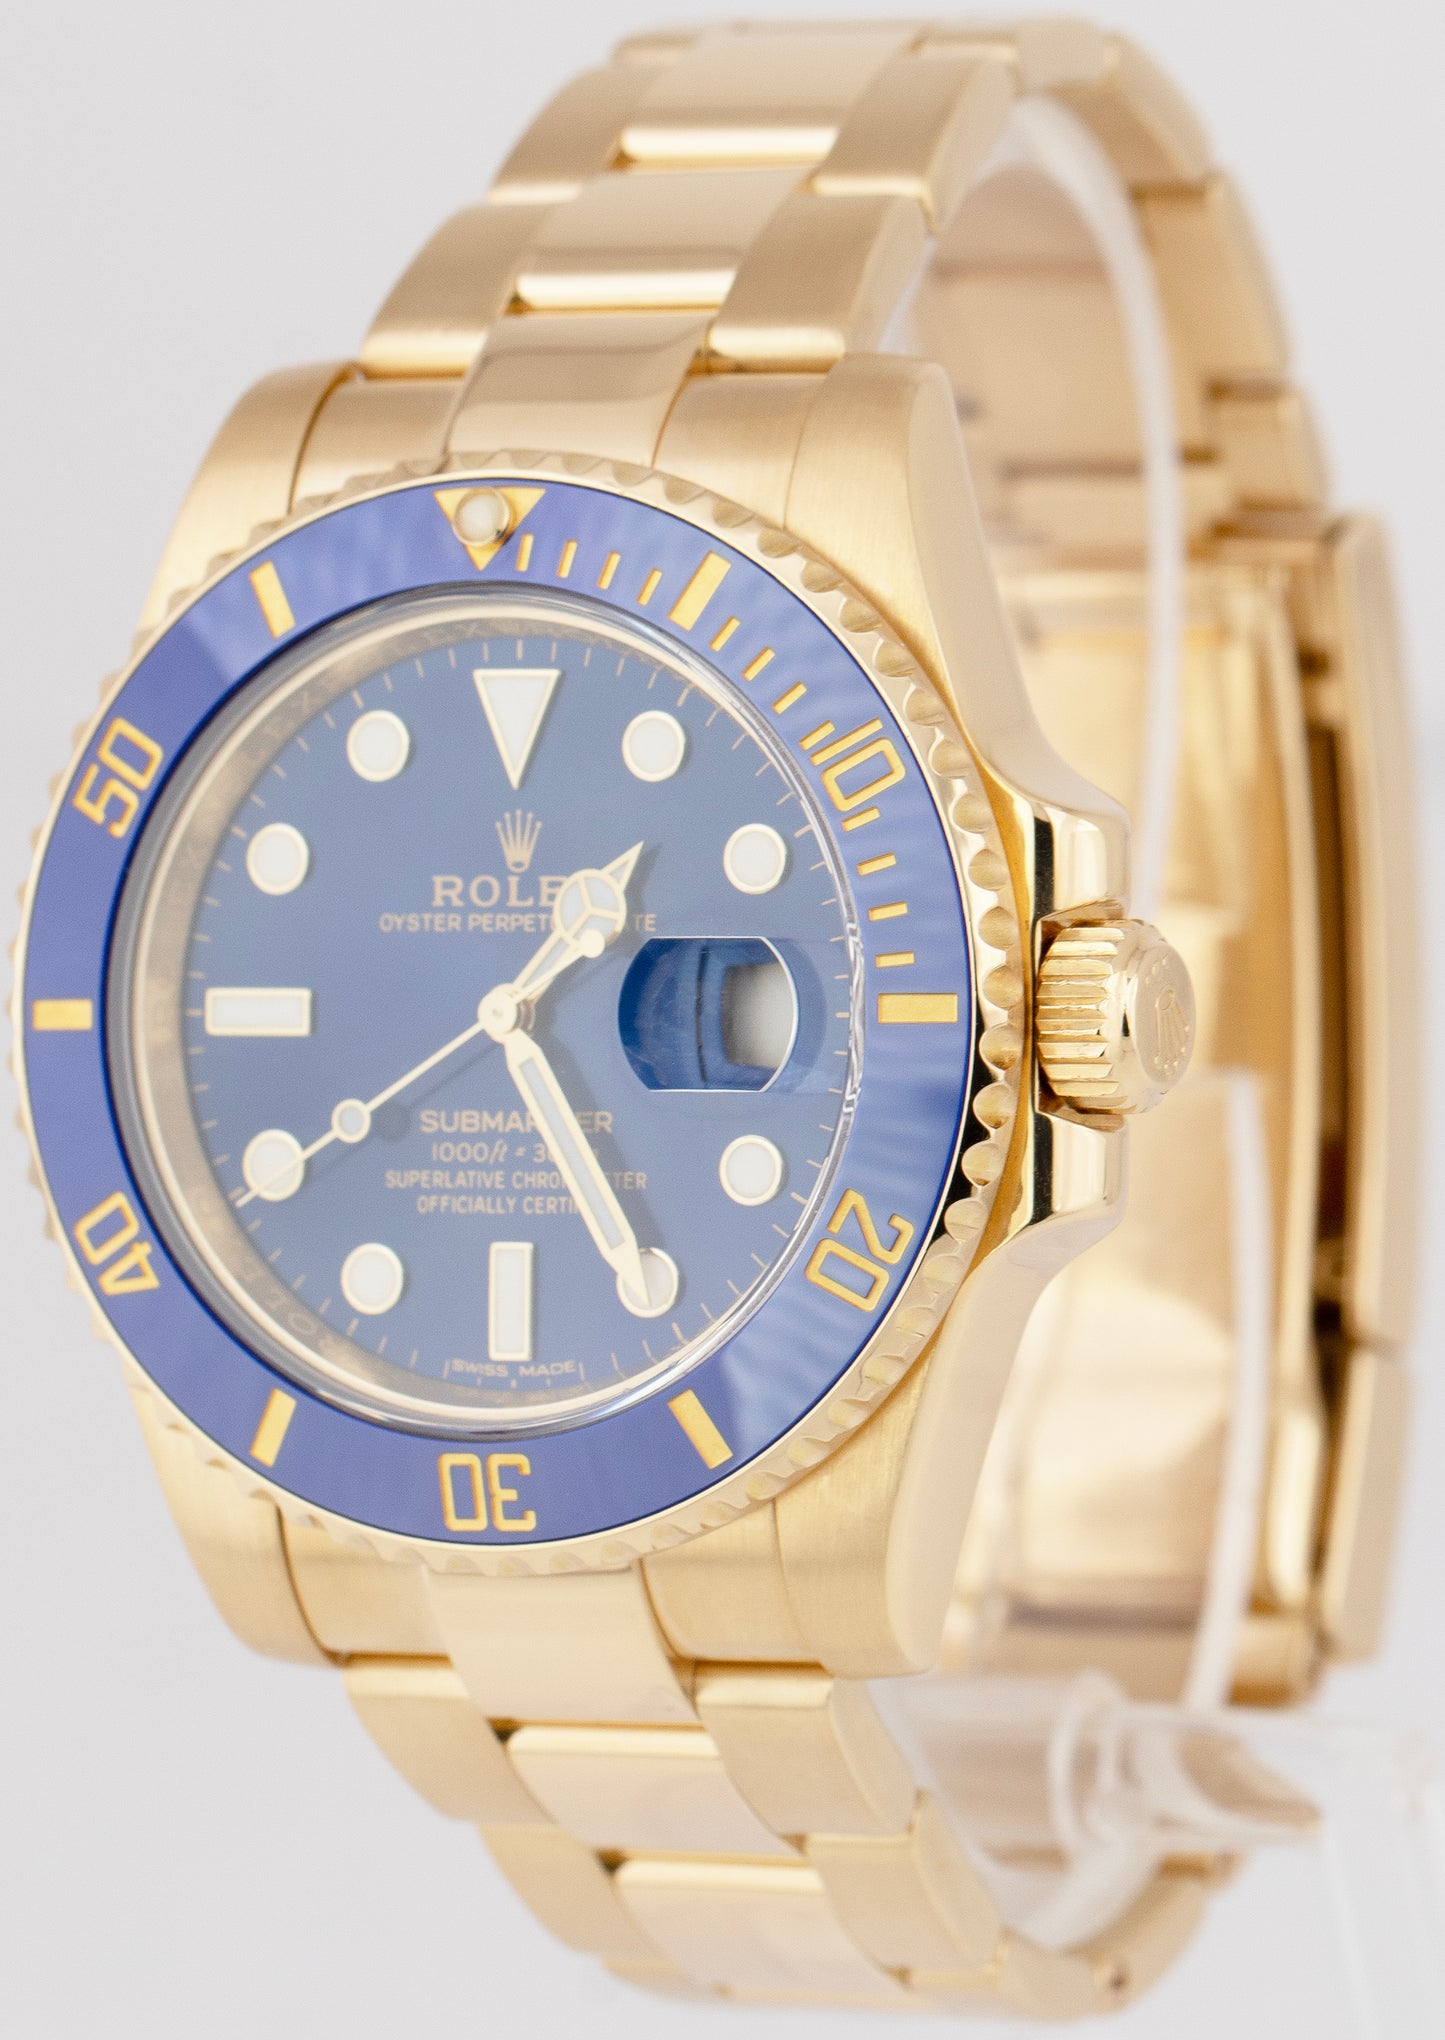 MINT Rolex Submariner Date 40mm Ceramic 18K Gold Blue Dive Watch 116618 LB BOX